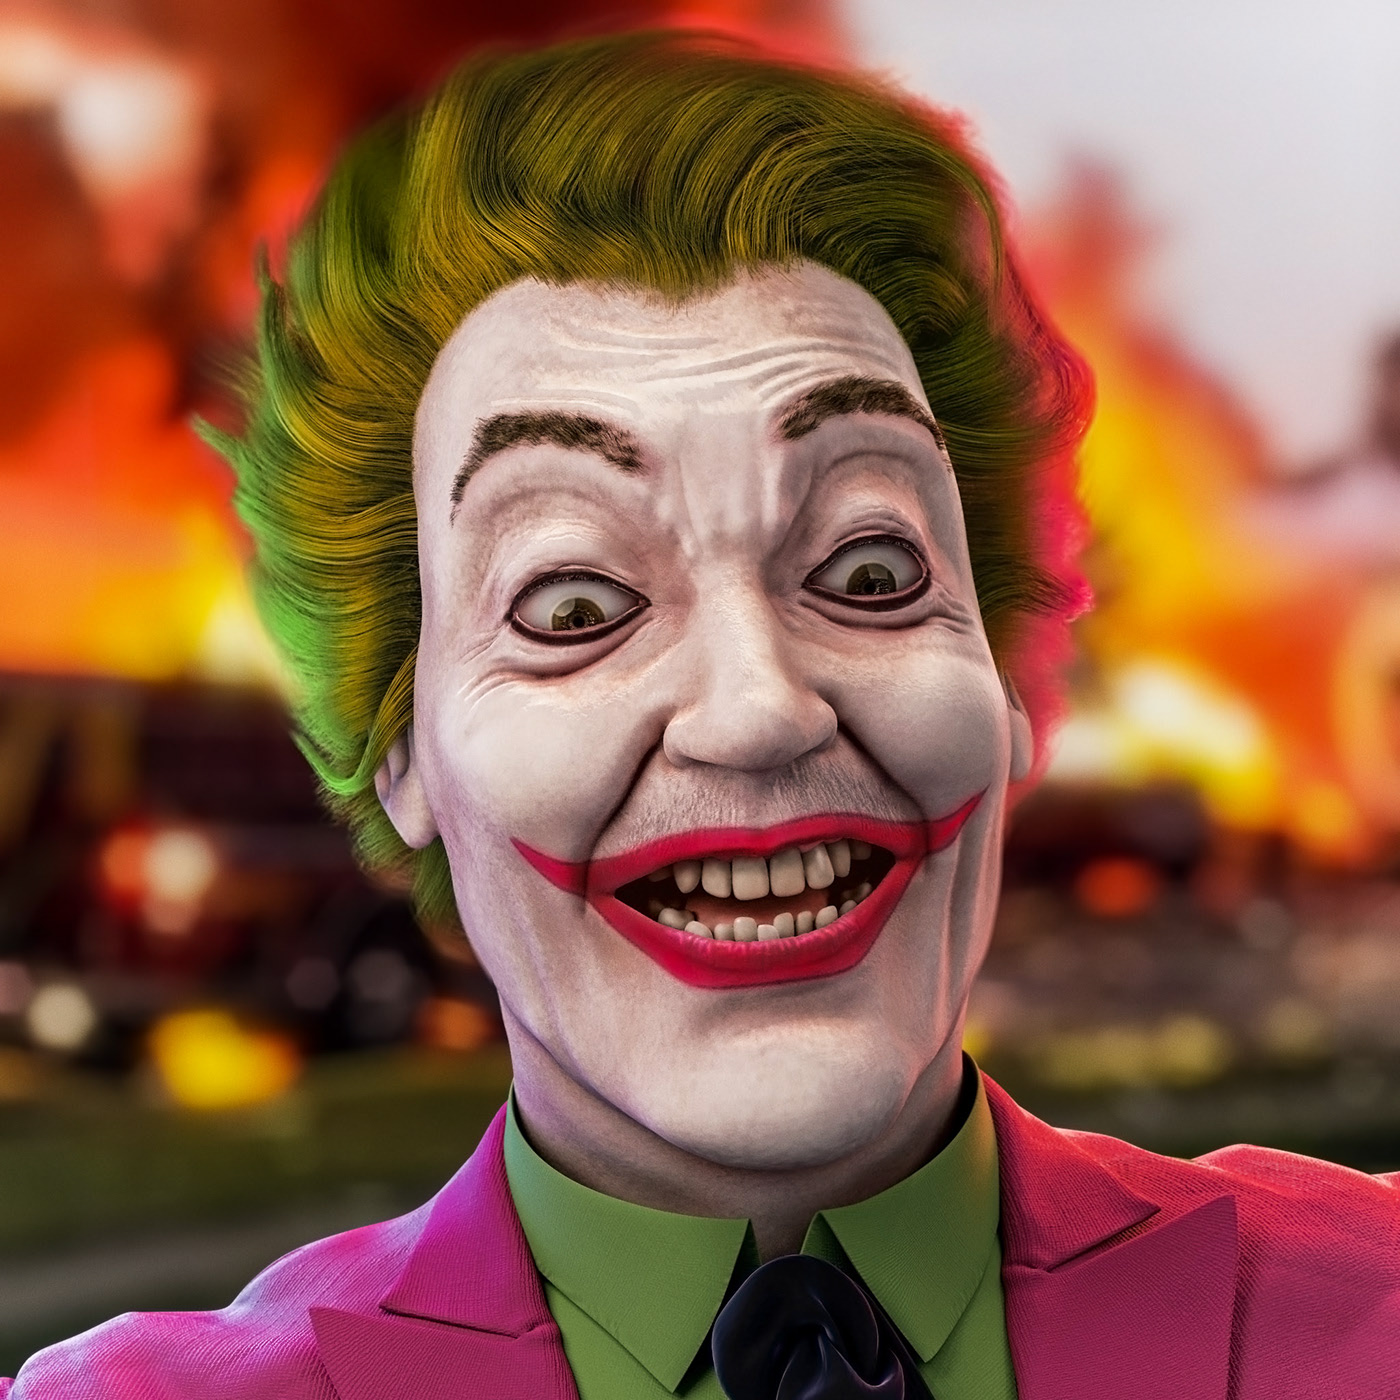 Joker profile picture on Behance